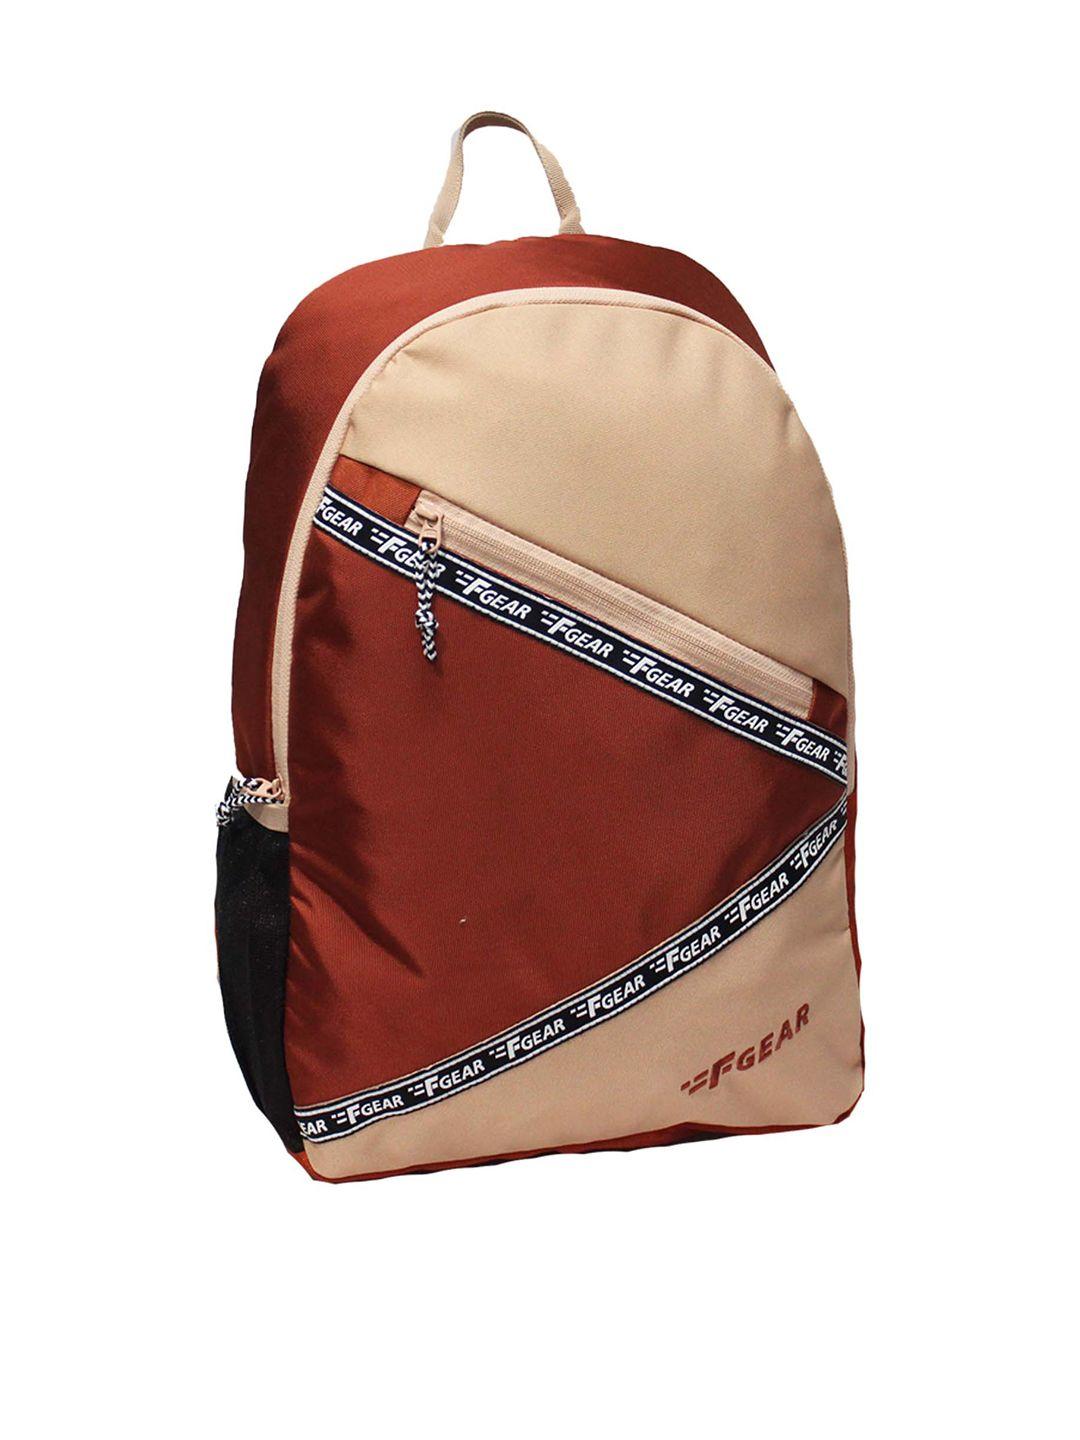 f gear unisex red & beige colourblocked backpack